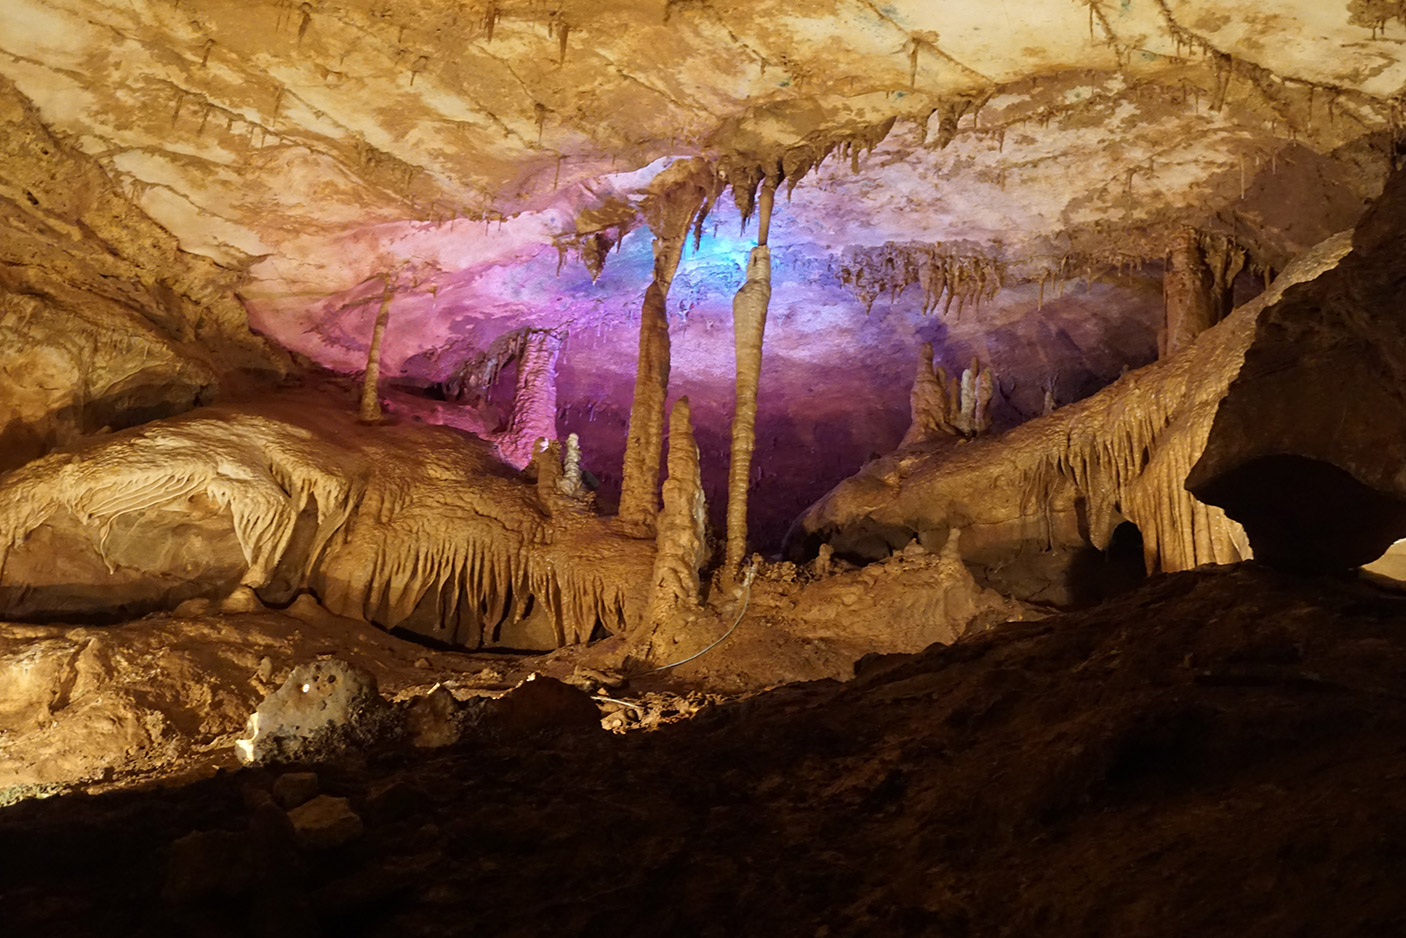 Inner Space Cavern, TX light show